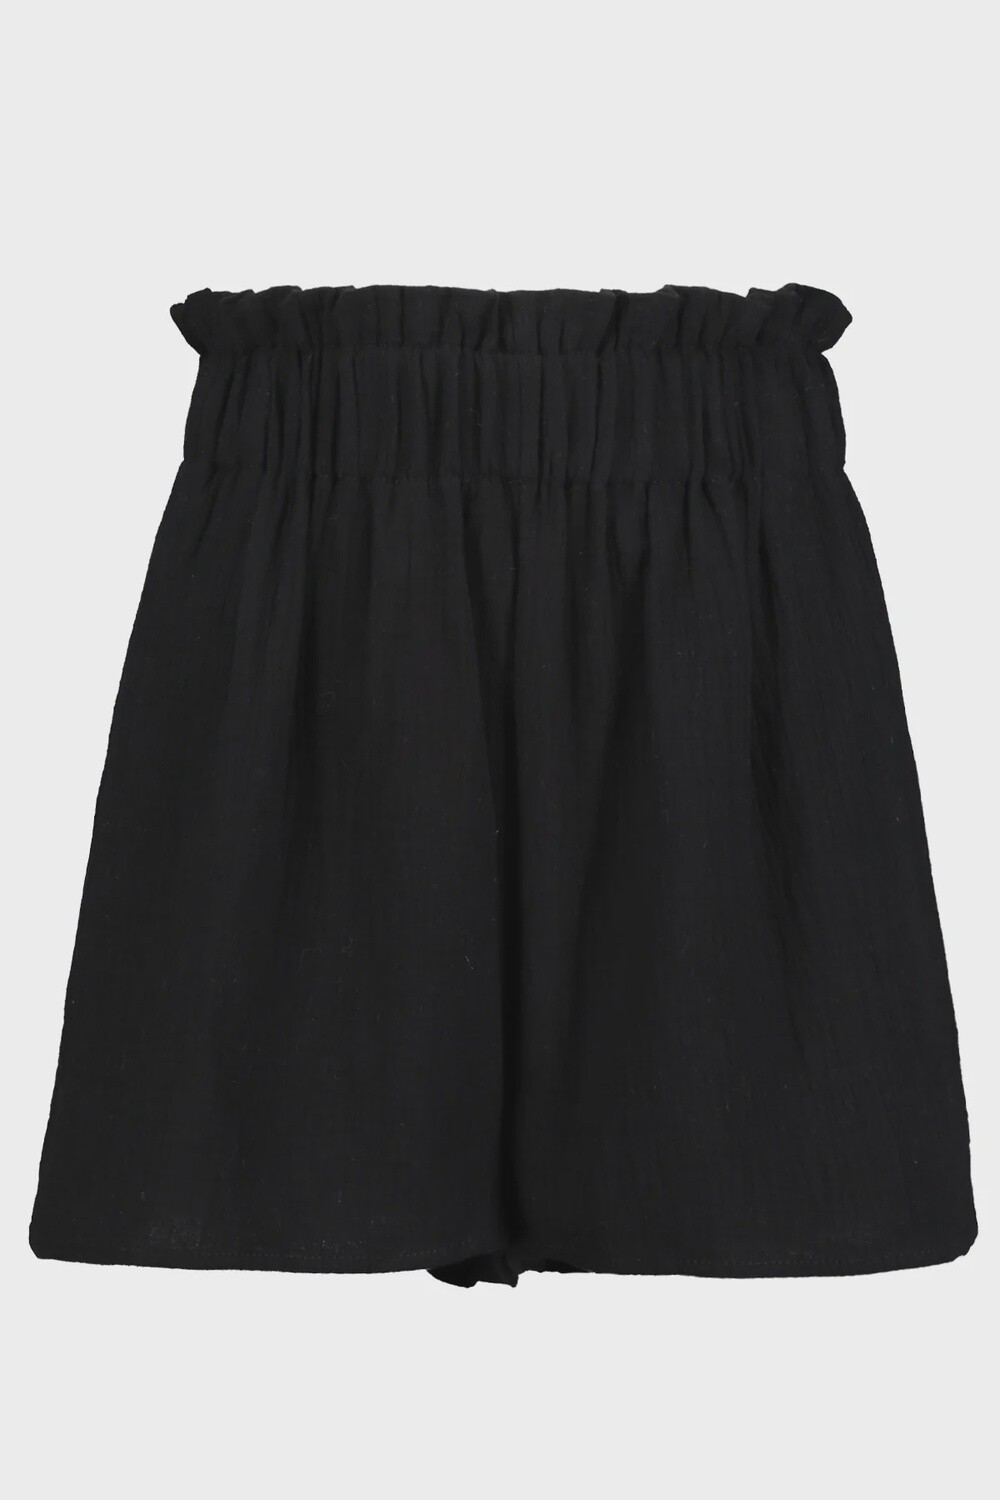 Sardinia Shorts